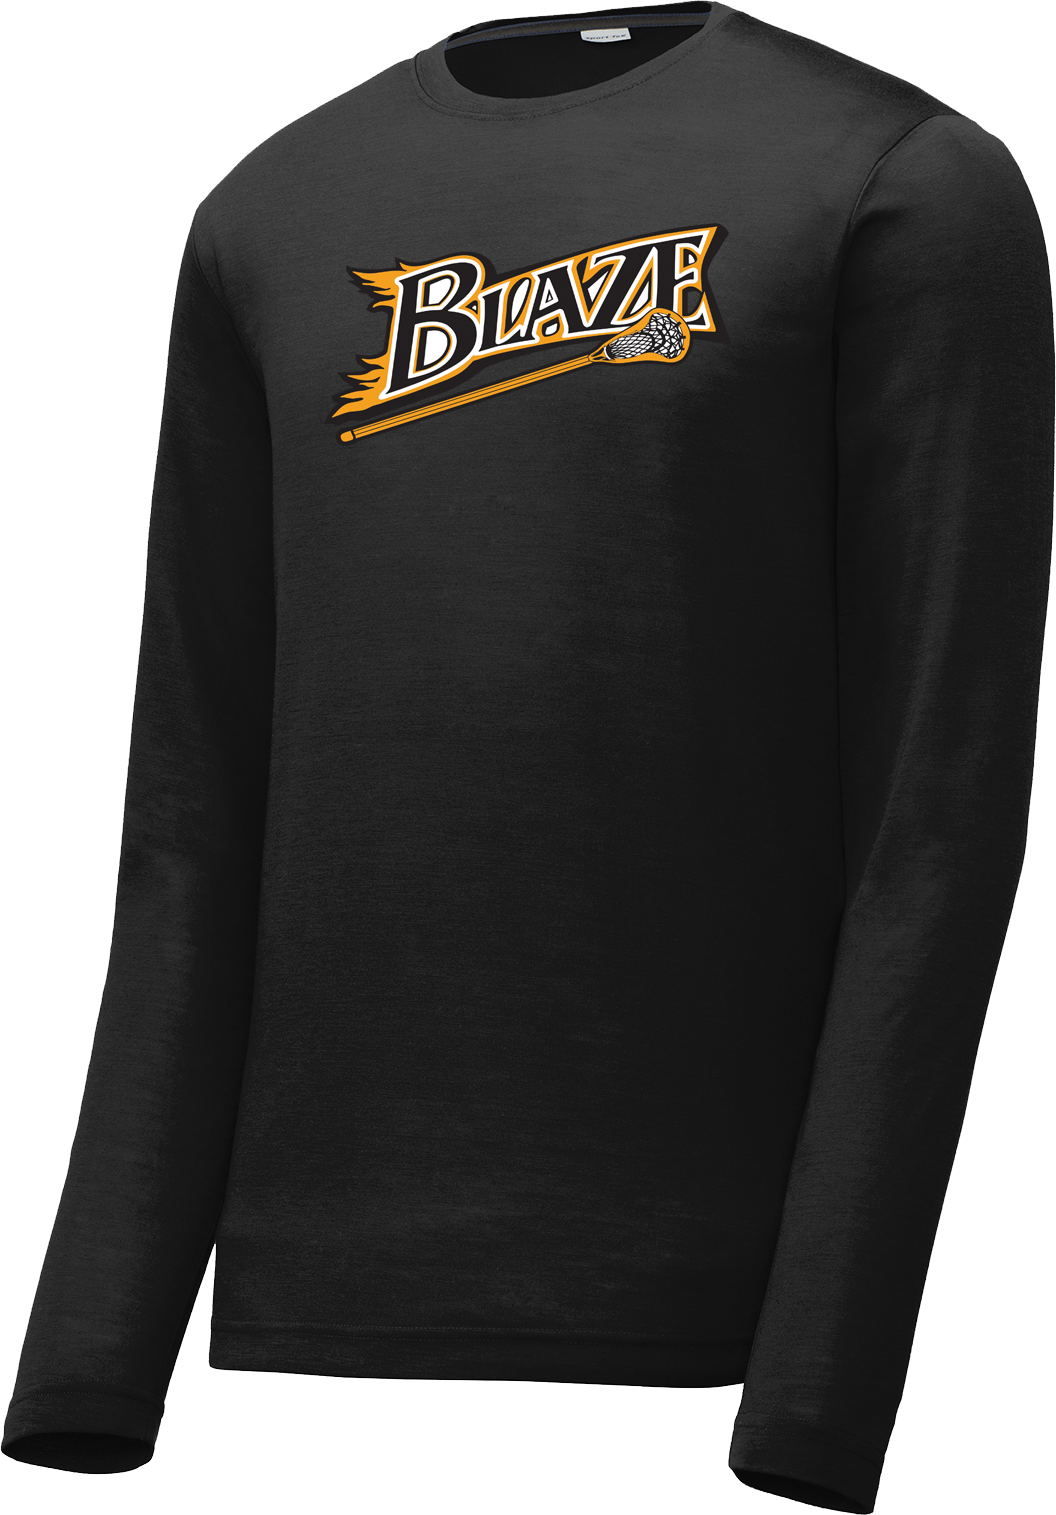 Blaze Lacrosse Black Long Sleeve CottonTouch Performance Shirt